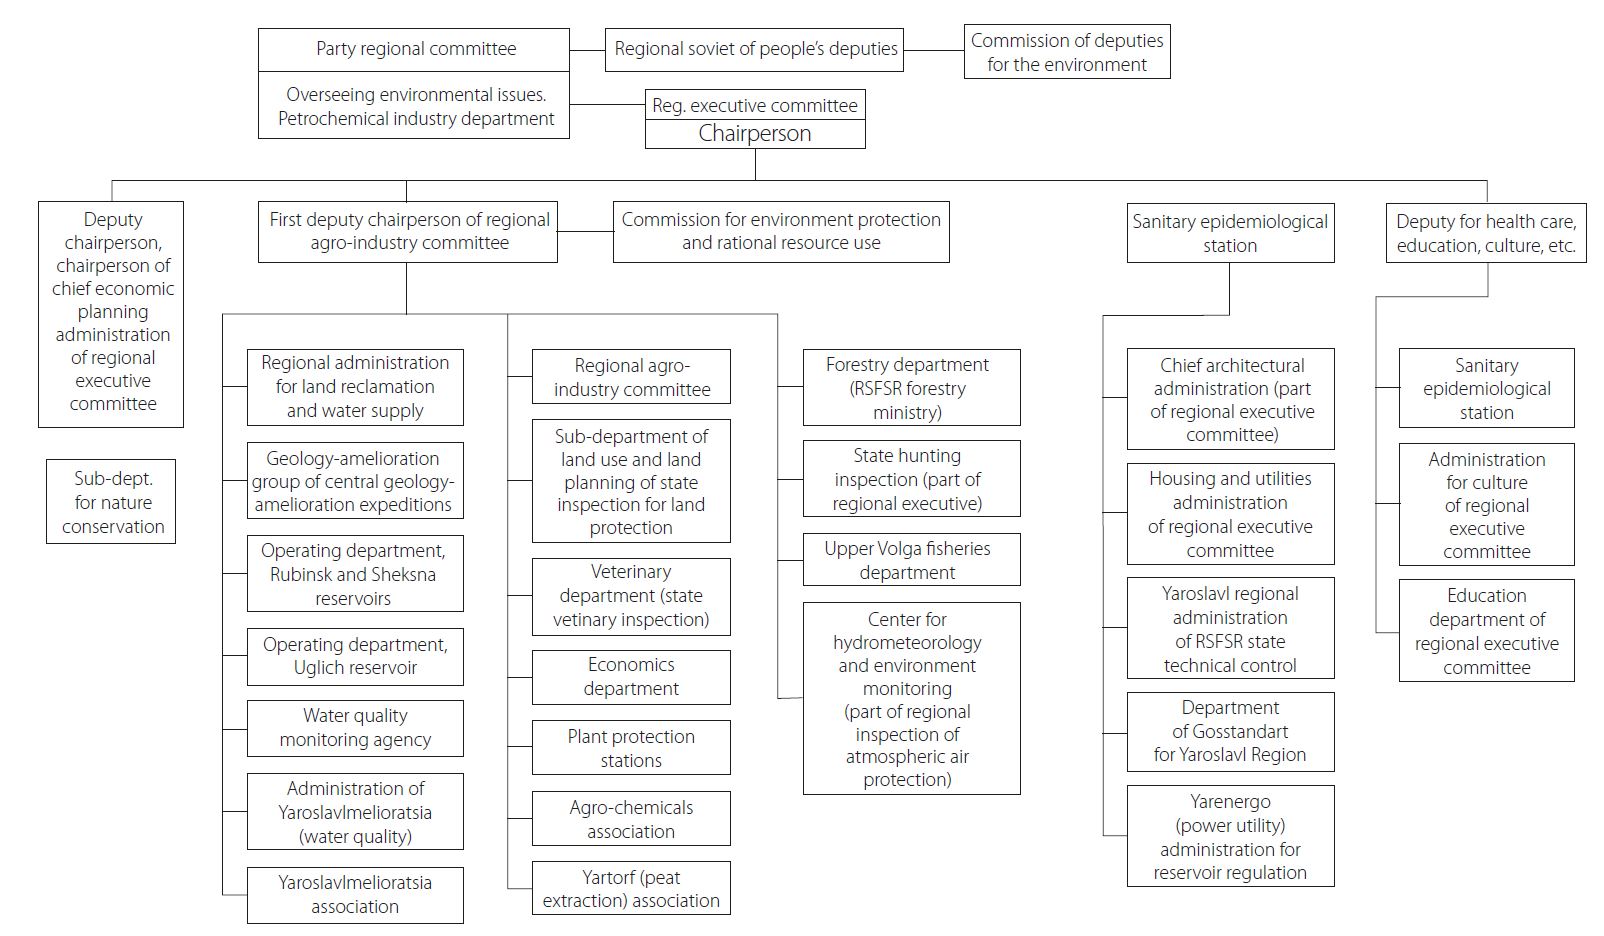 Organizational chart of regional environmental management in Yaroslavl Region (1988)